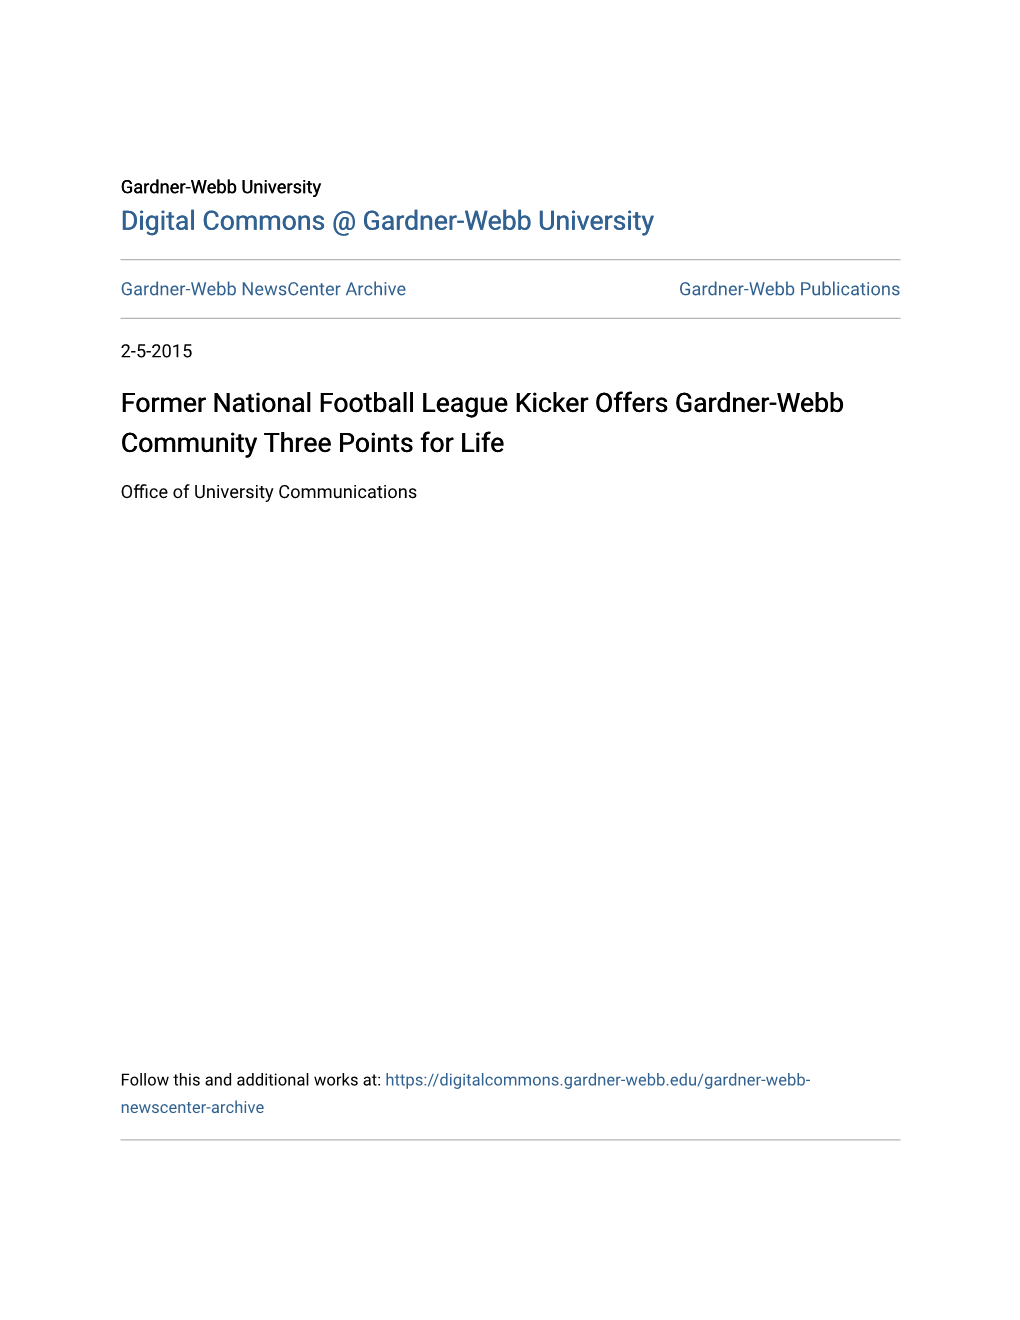 Former National Football League Kicker Offers Gardner-Webb Community Three Points for Life